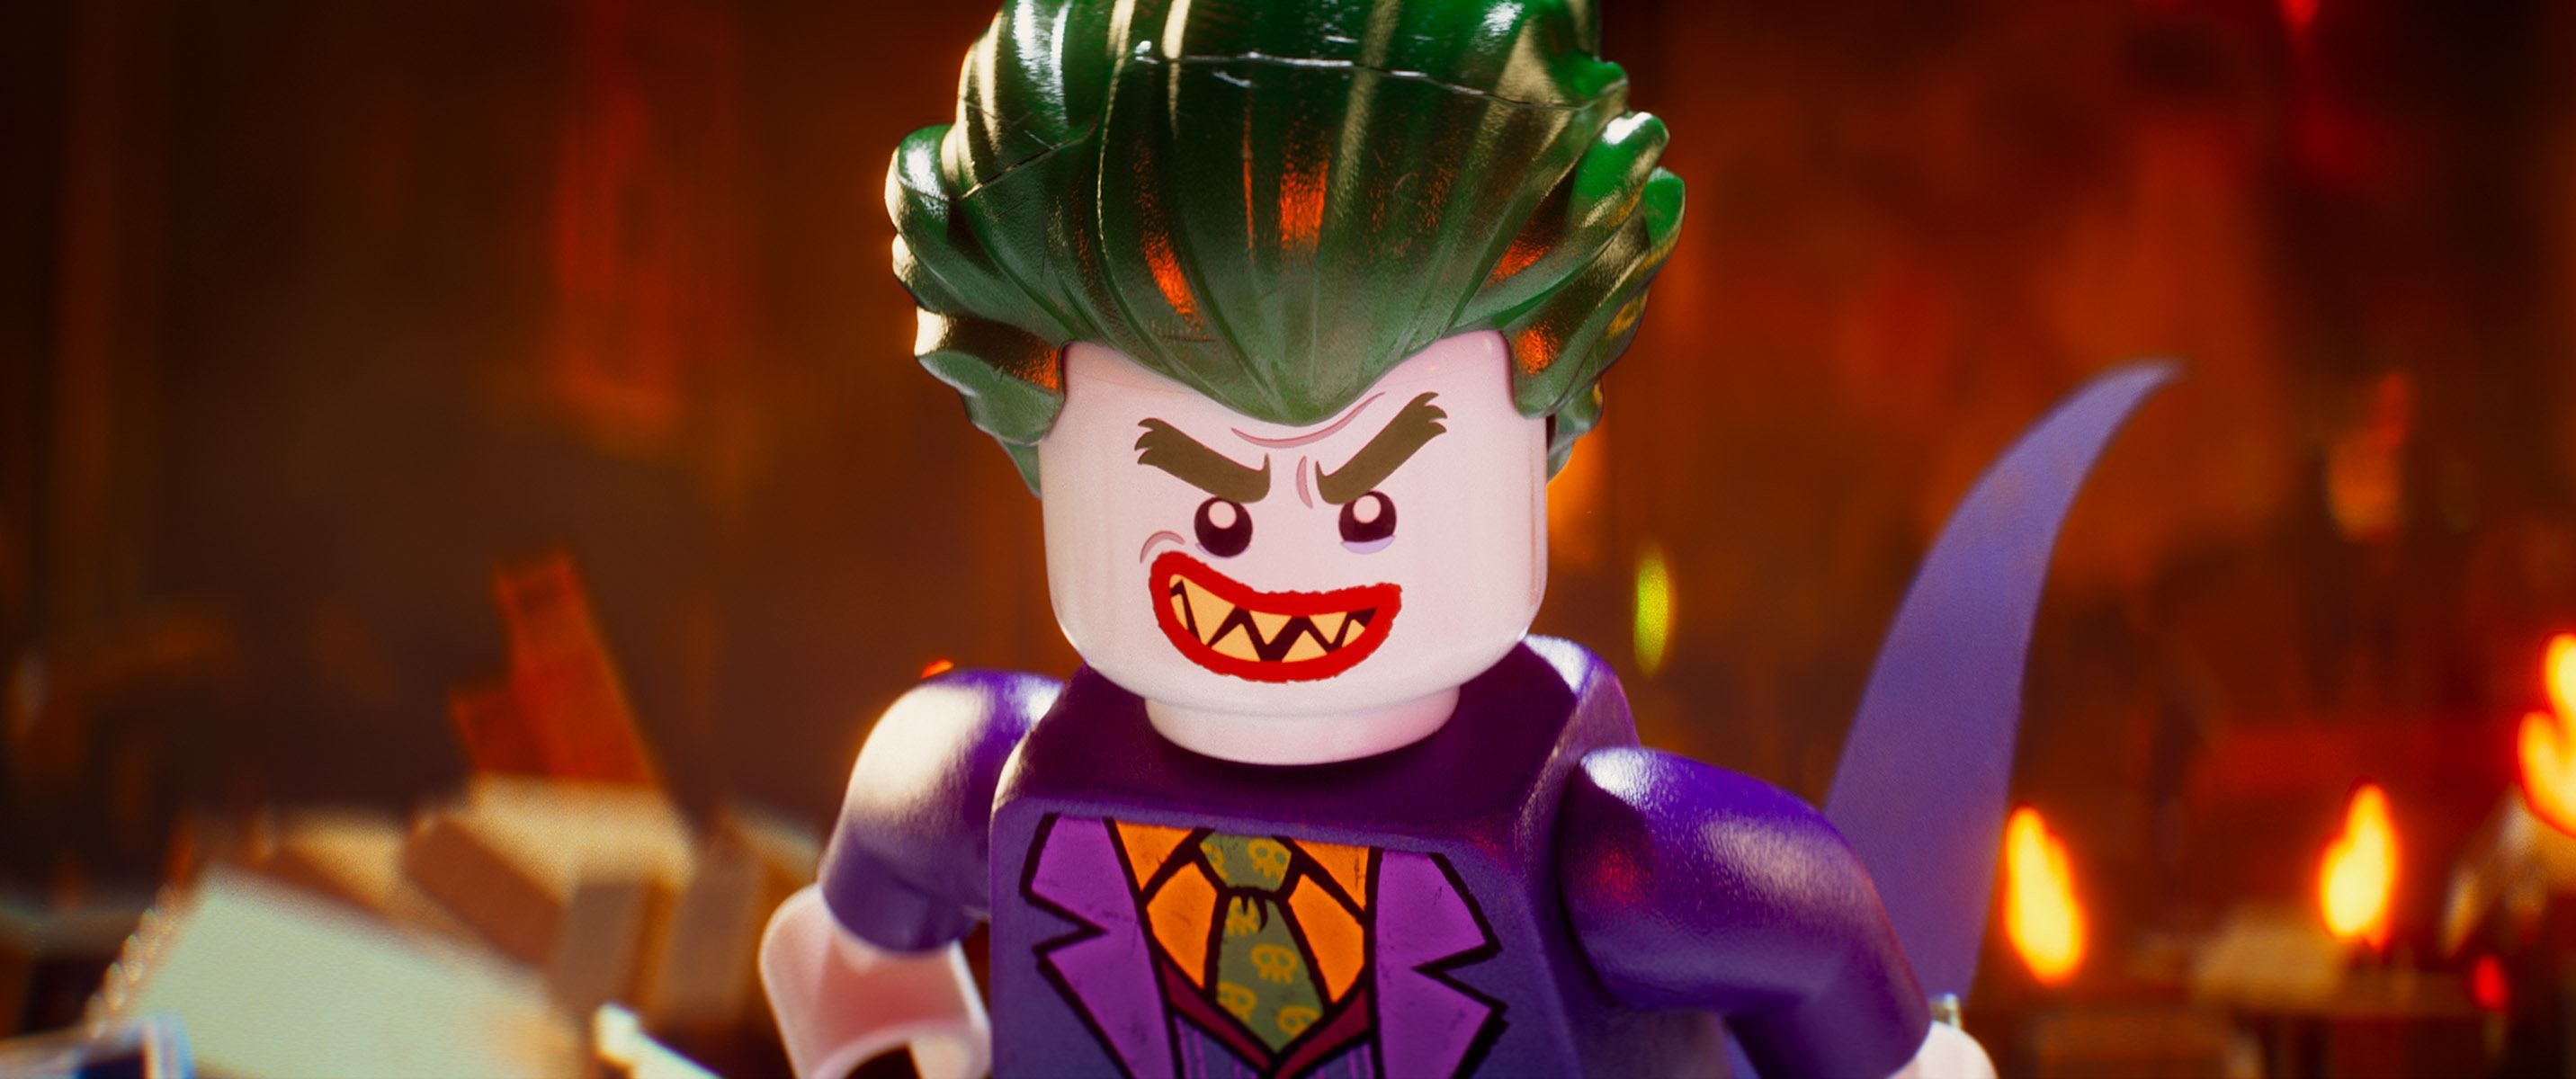 2864x1200 The Lego Batman Movie The Joker Wallpaper